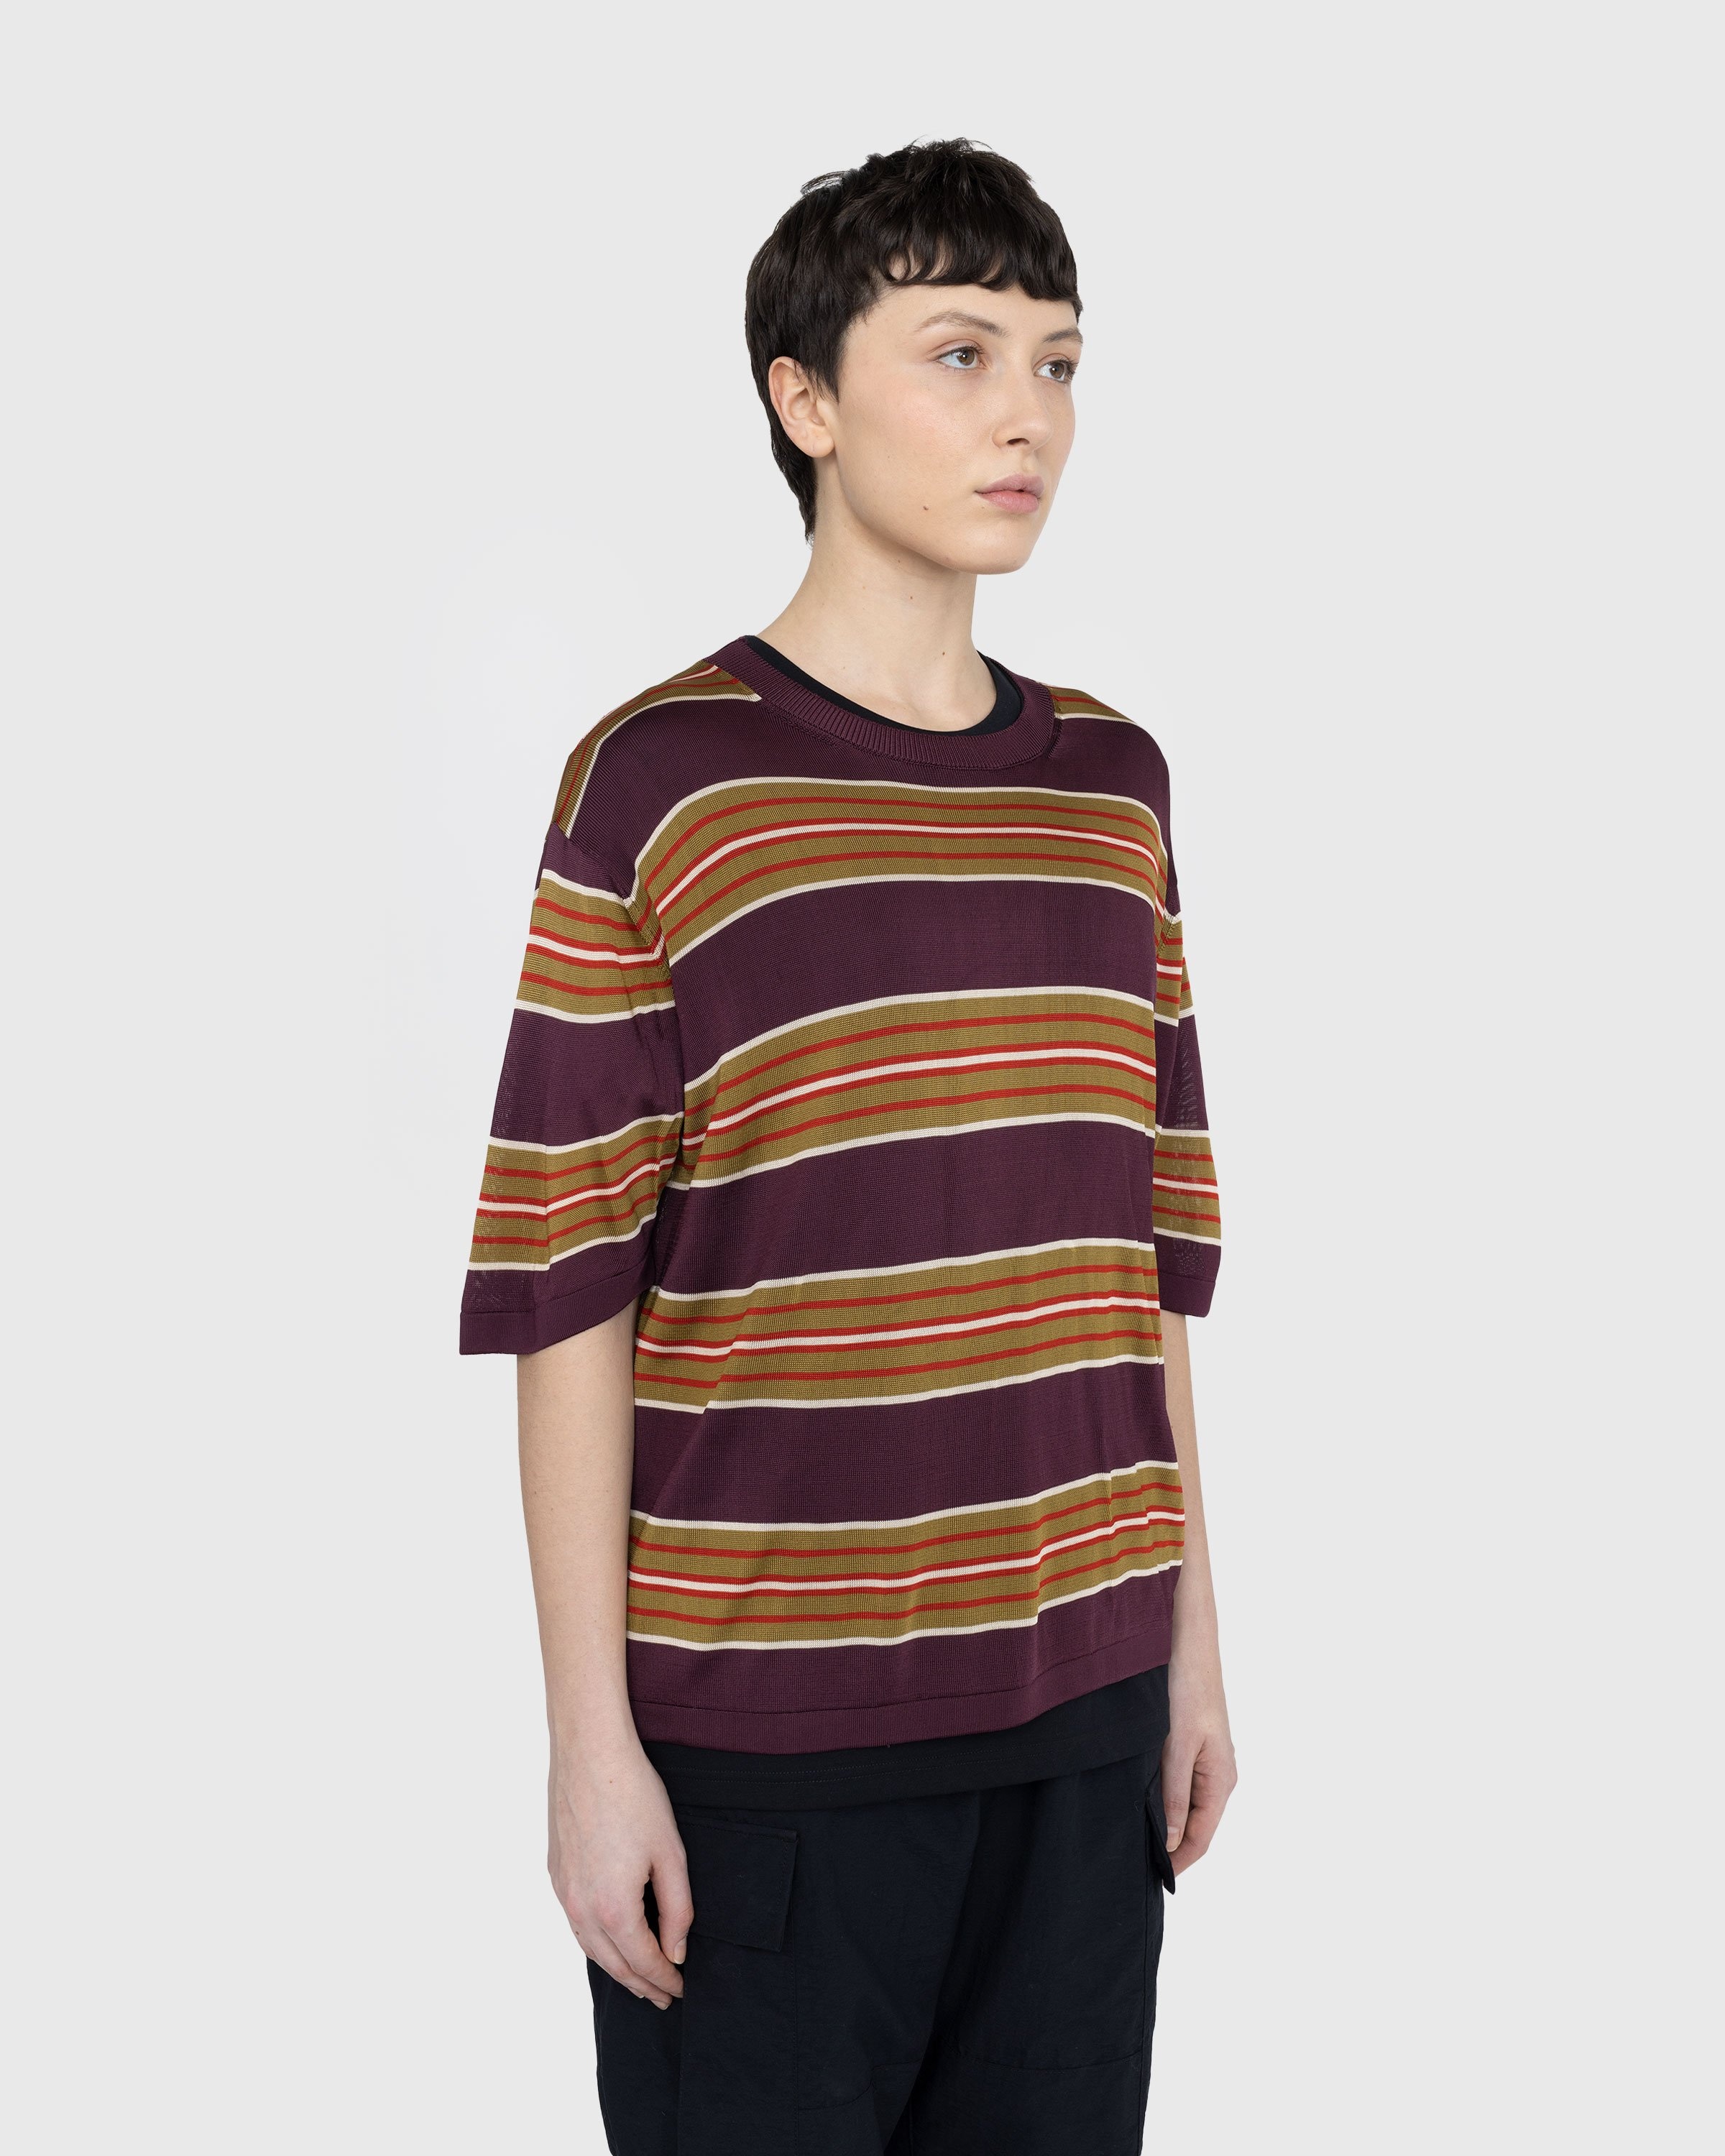 Dries van Noten – Mias Knit T-Shirt Burgundy - T-Shirts - Red - Image 2